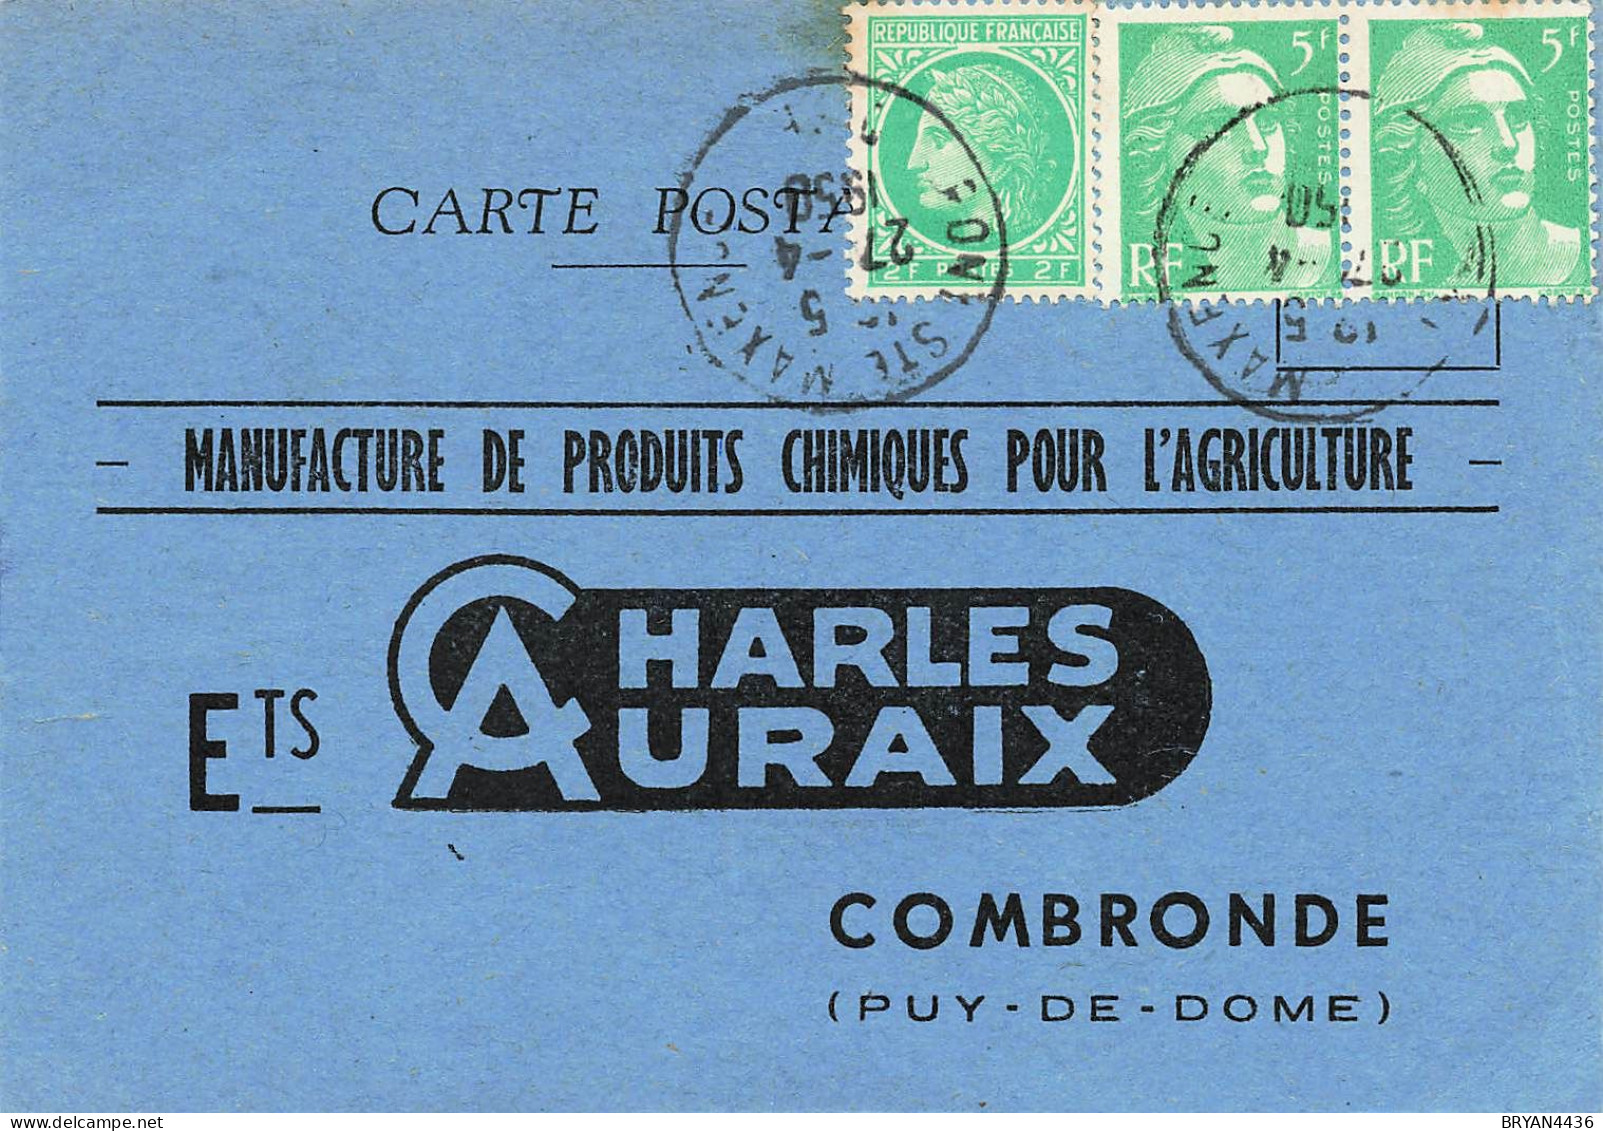 63 - COMBRONDE - MANUFACTURE "CHARLES AURAIX" - CARTE - TRES BON ETAT - Combronde